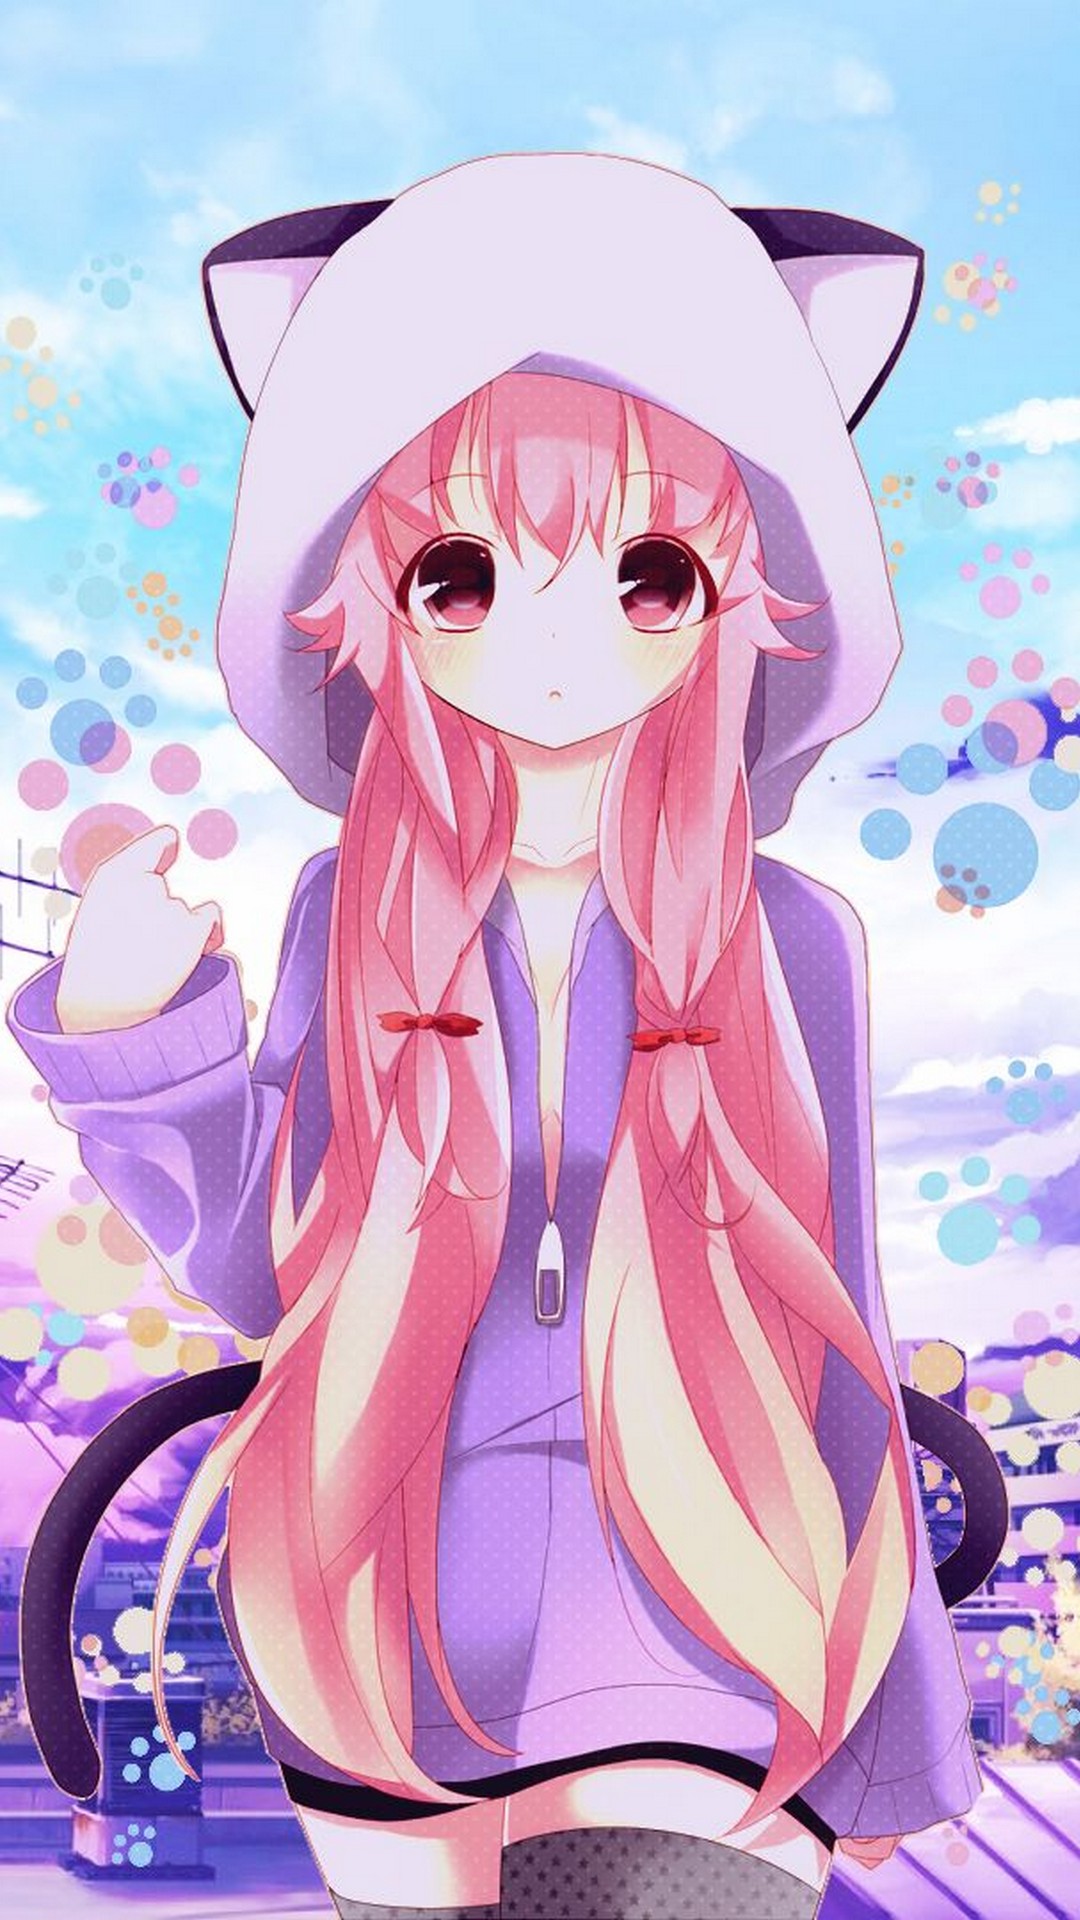 Anime iPhone Home Screen Wallpaper - 2021 Cute iPhone Wallpaper